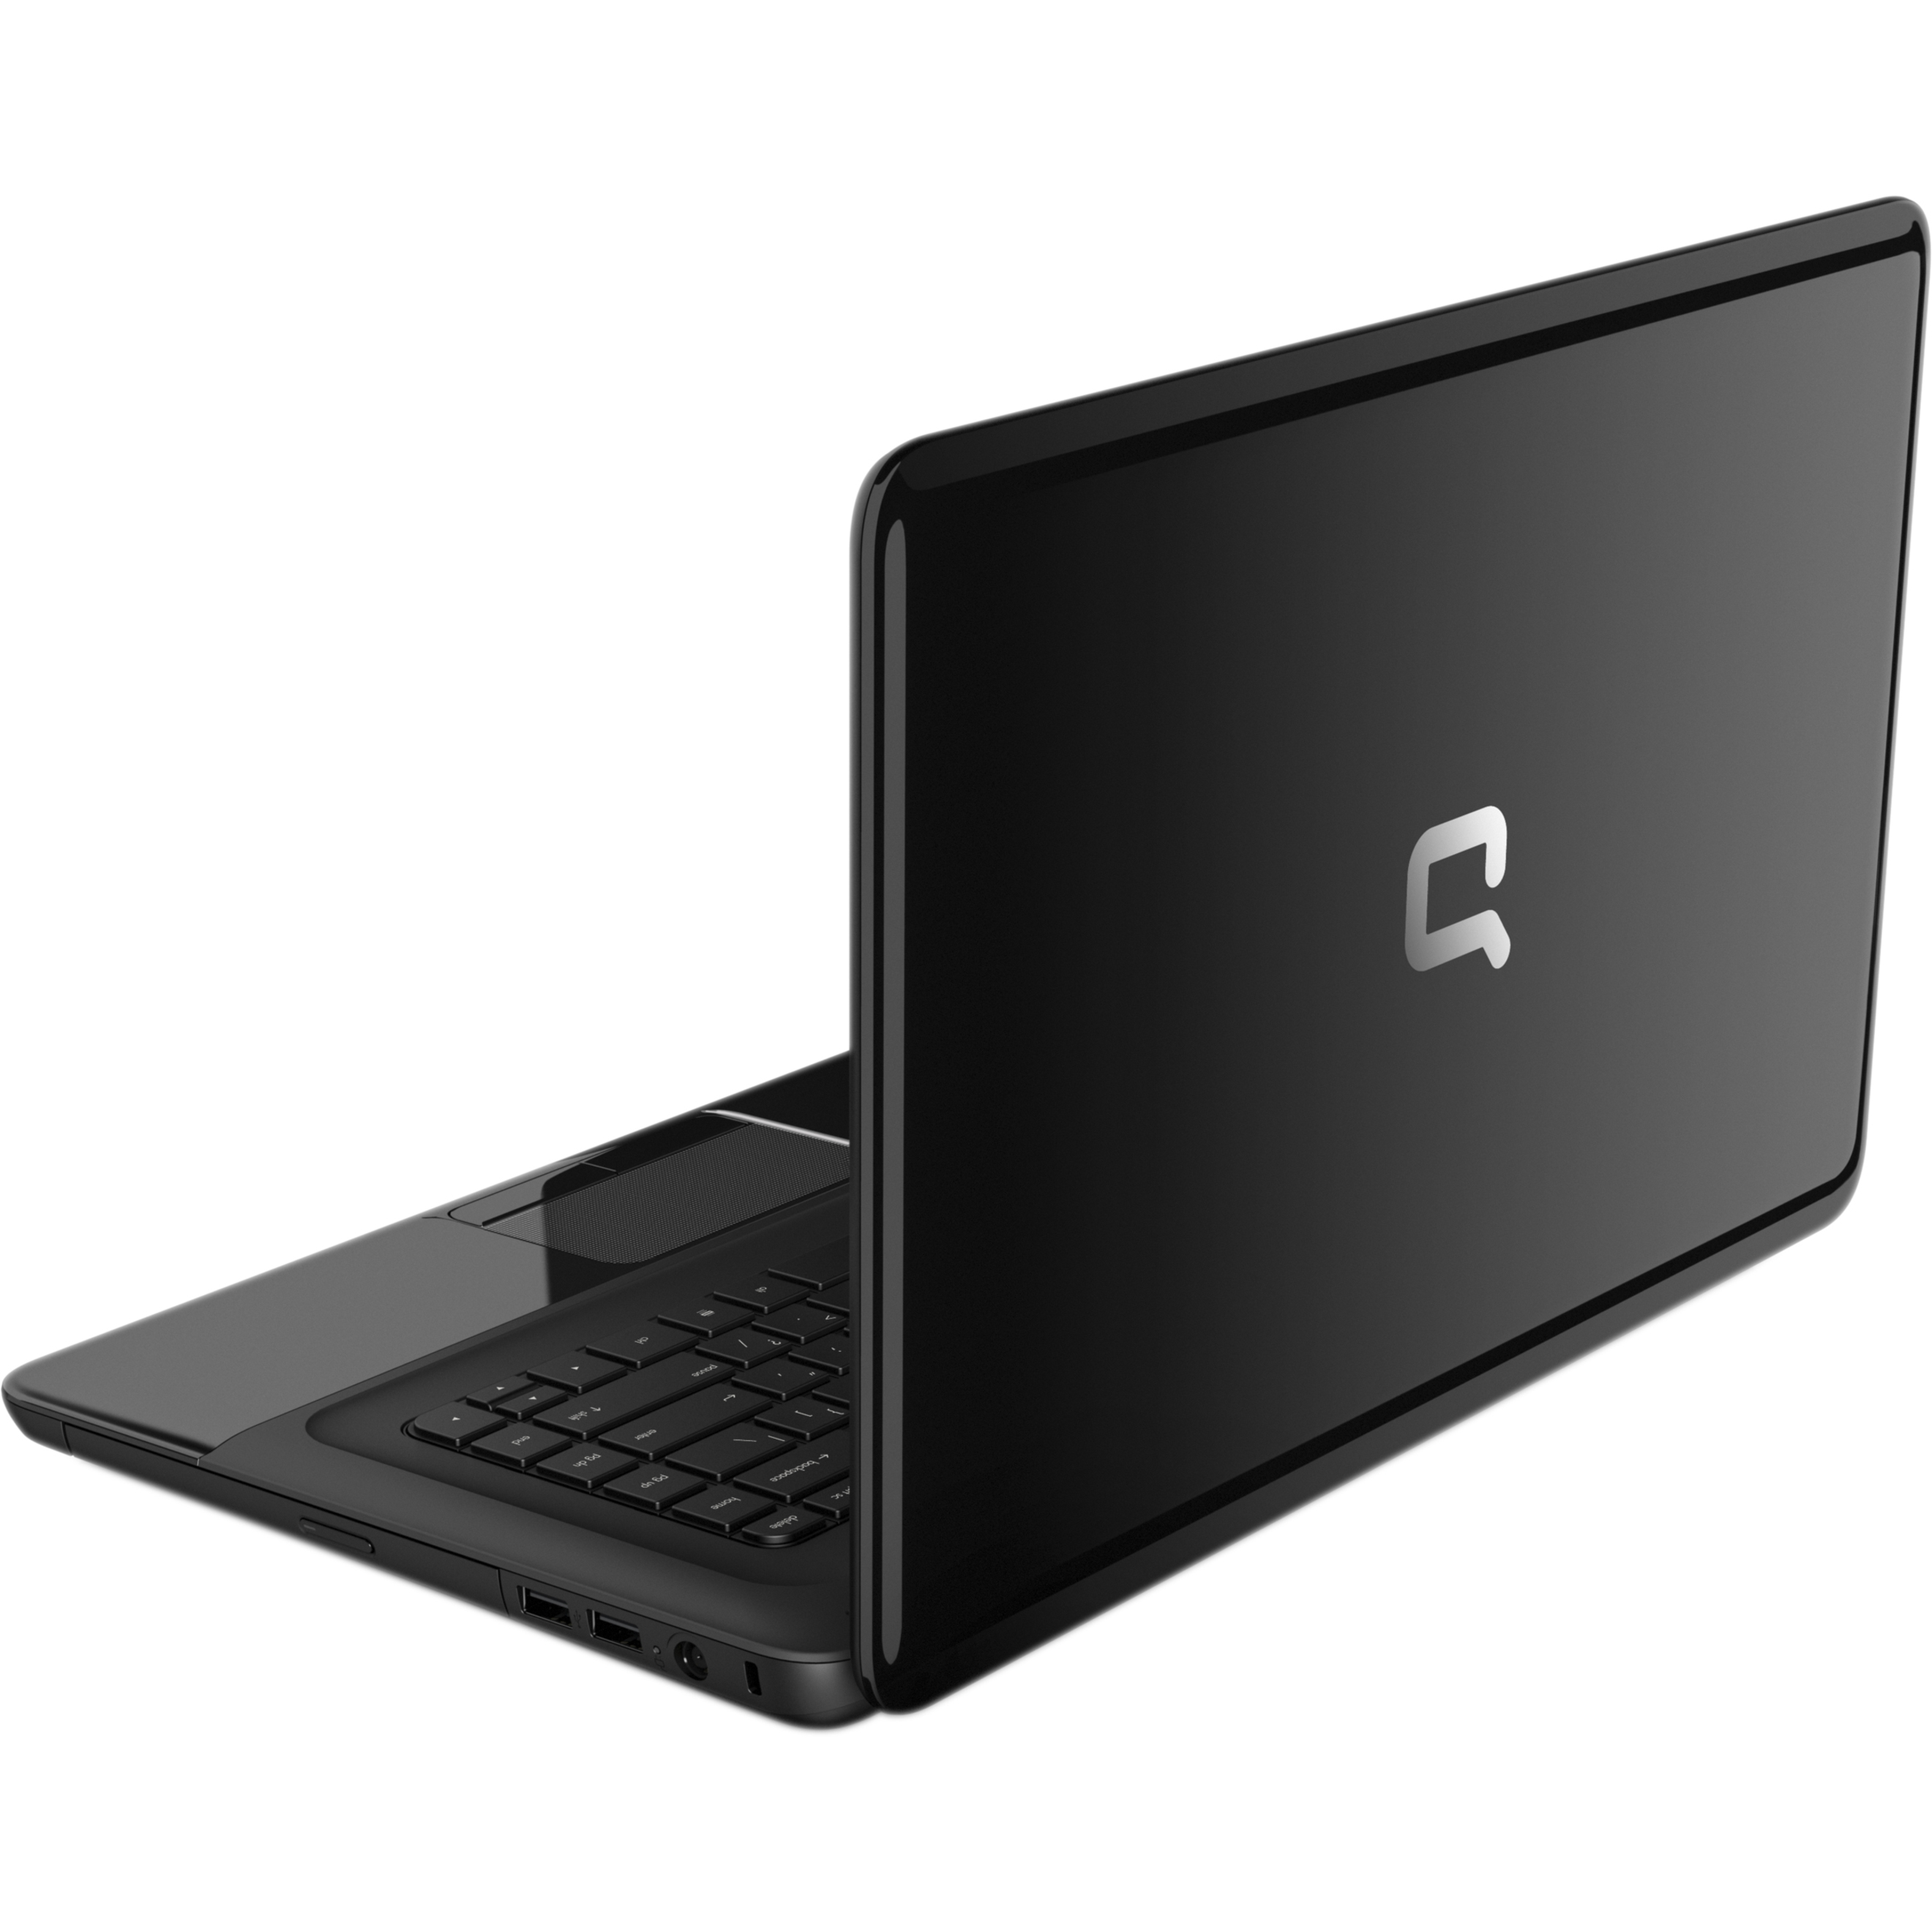 HP Presario 15.6" Laptop, AMD E-Series E1-1200, 320GB HD, DVD Writer, Windows 8, CQ58-b10NR - image 5 of 6